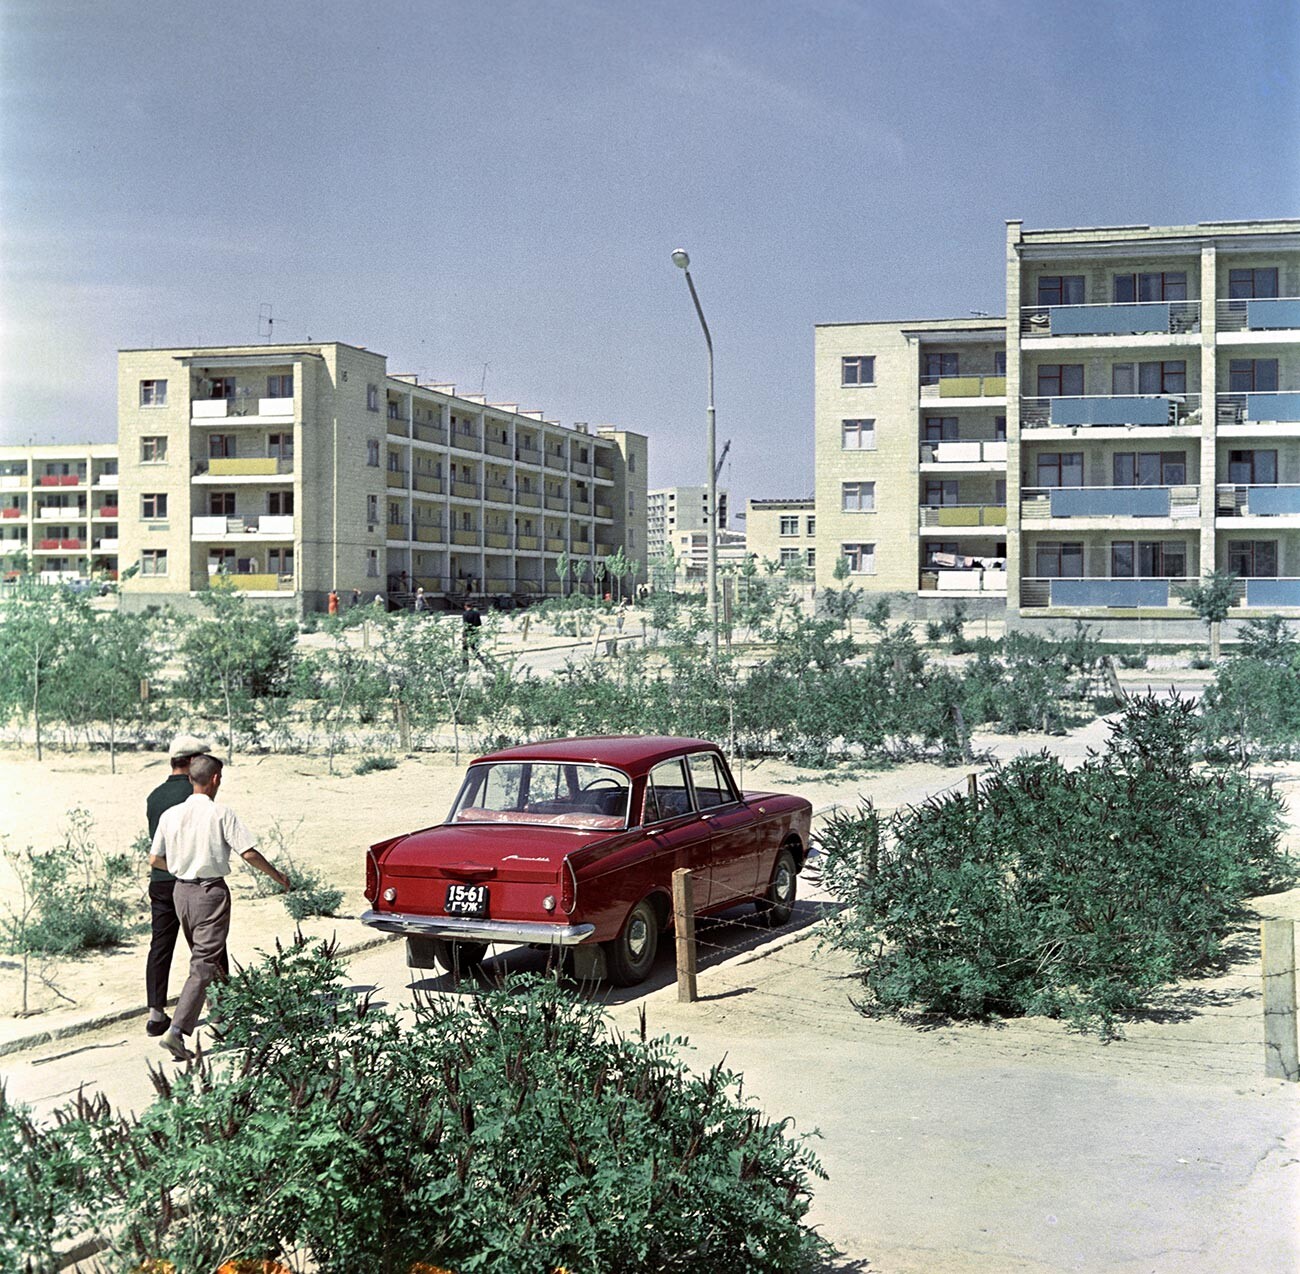 New buildings in Shevchenko city, now Aktau, on Mangyshlak Peninsula in 1966.